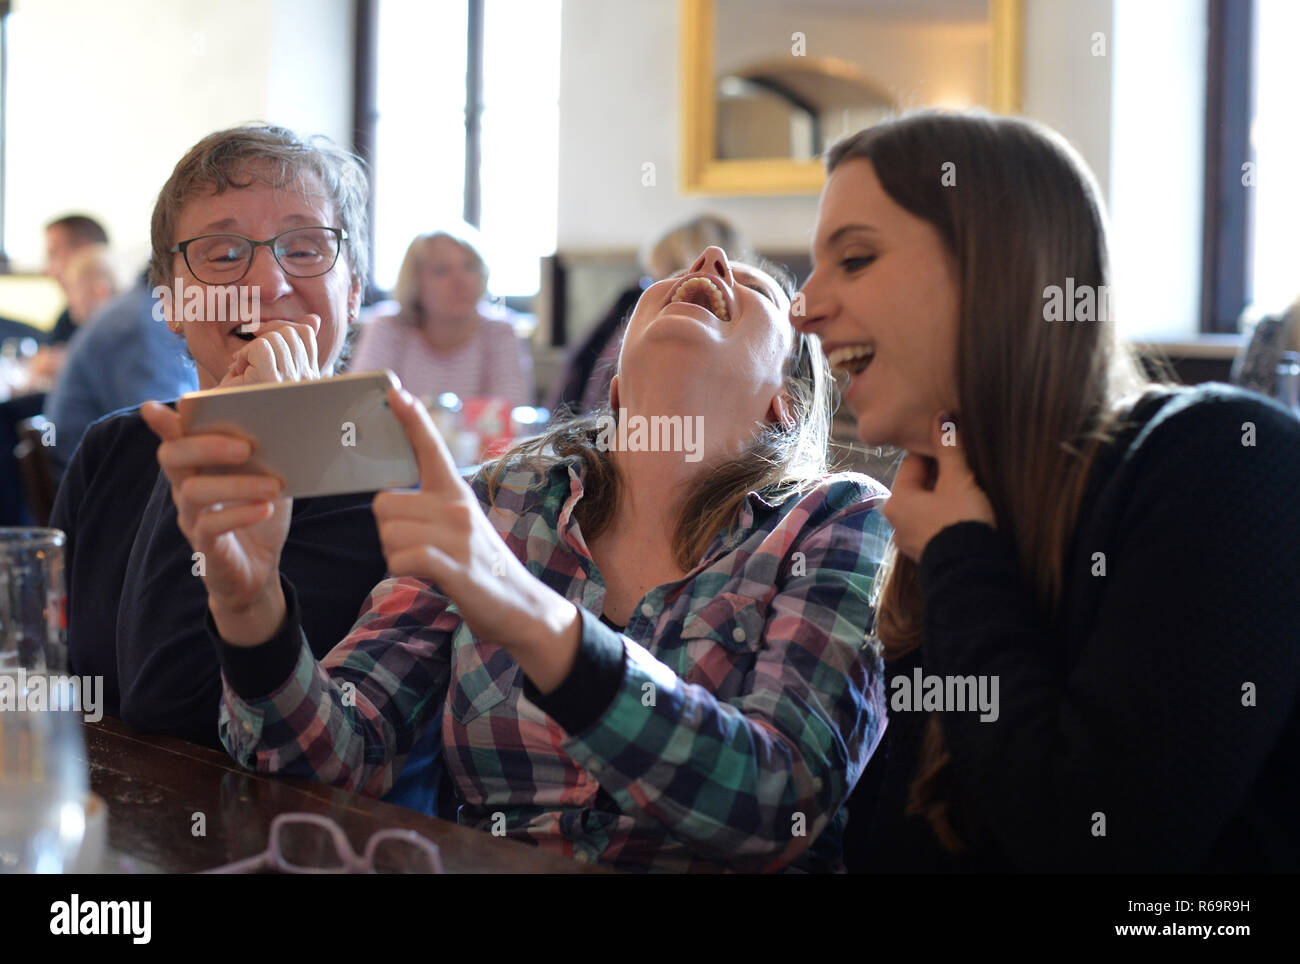 Young Women and Older Women View Smartphone, Laugh, Portrait, Café, Stuttgart, Baden-Württemberg, Germany Stock Photo